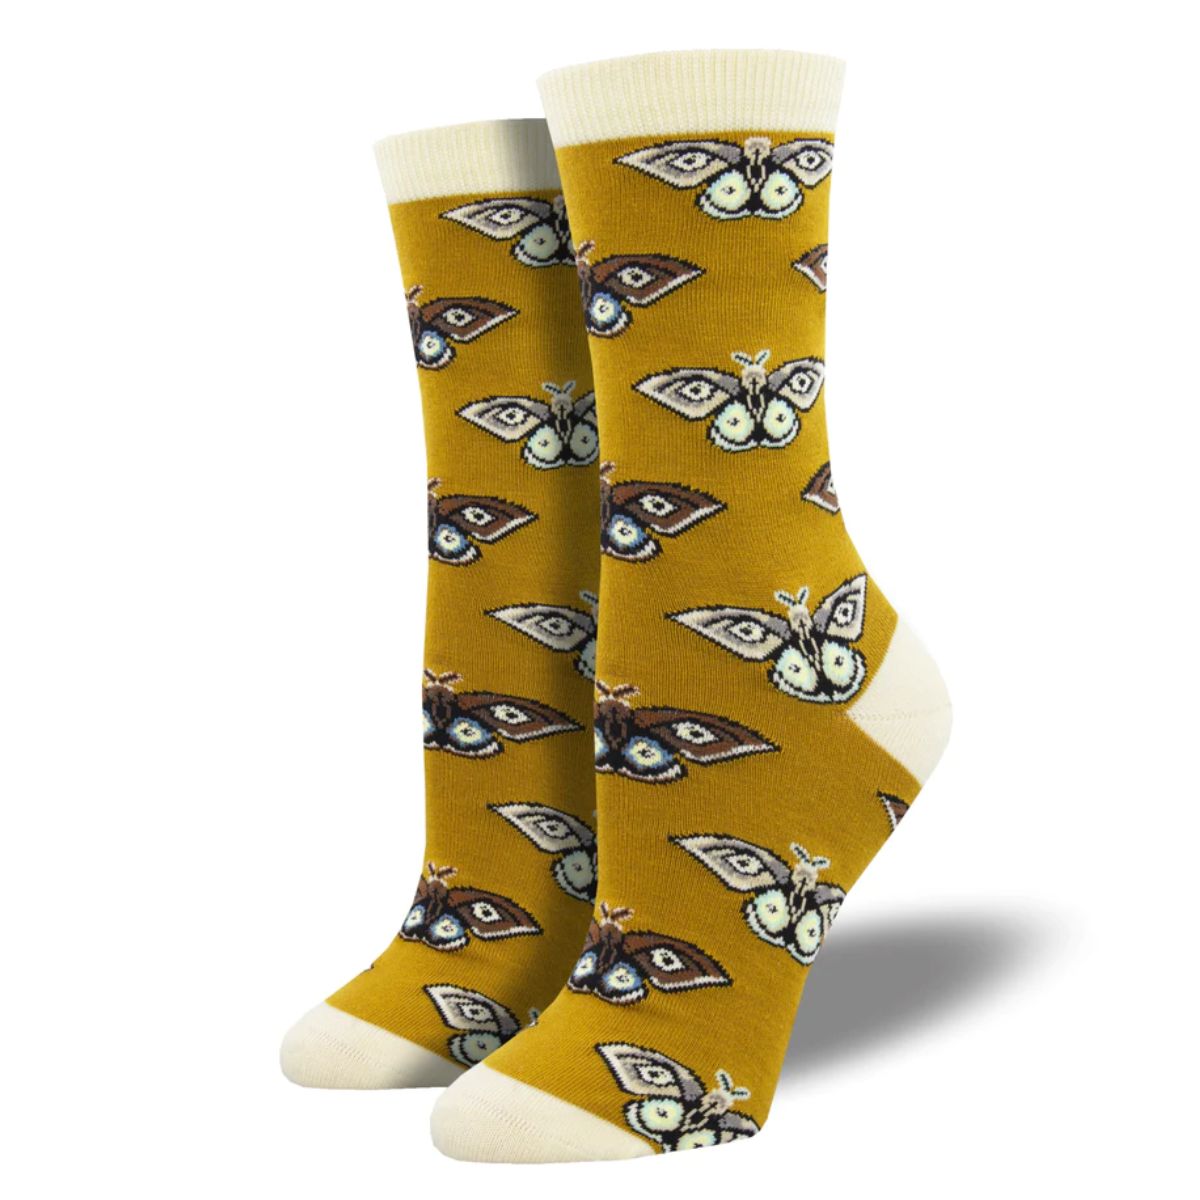 Vintage moths socks a pair of gold yellow crew socks with moth print